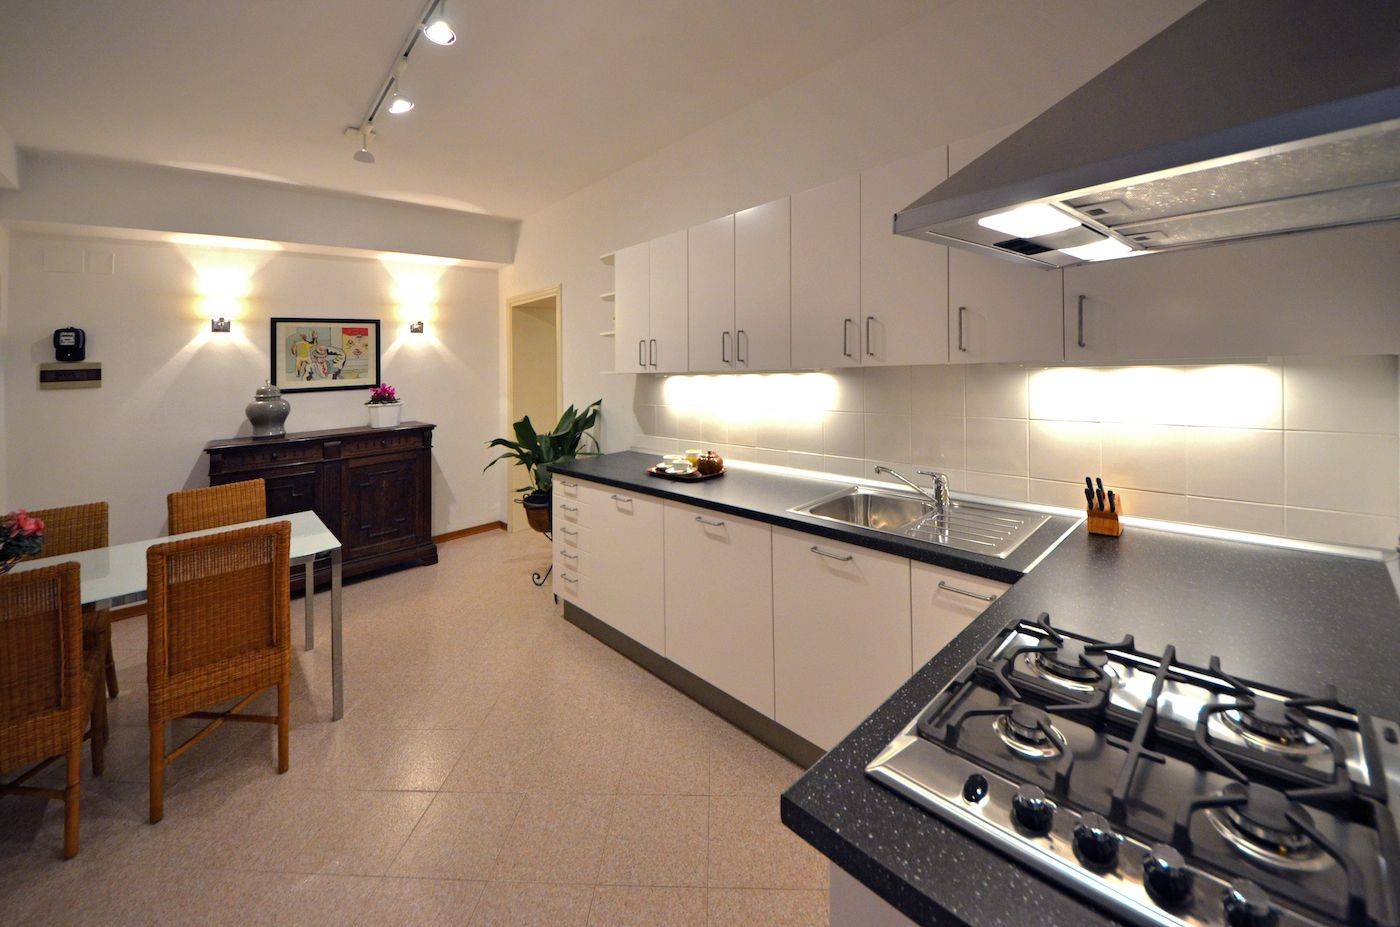 spacious kitchen with brand new appliances